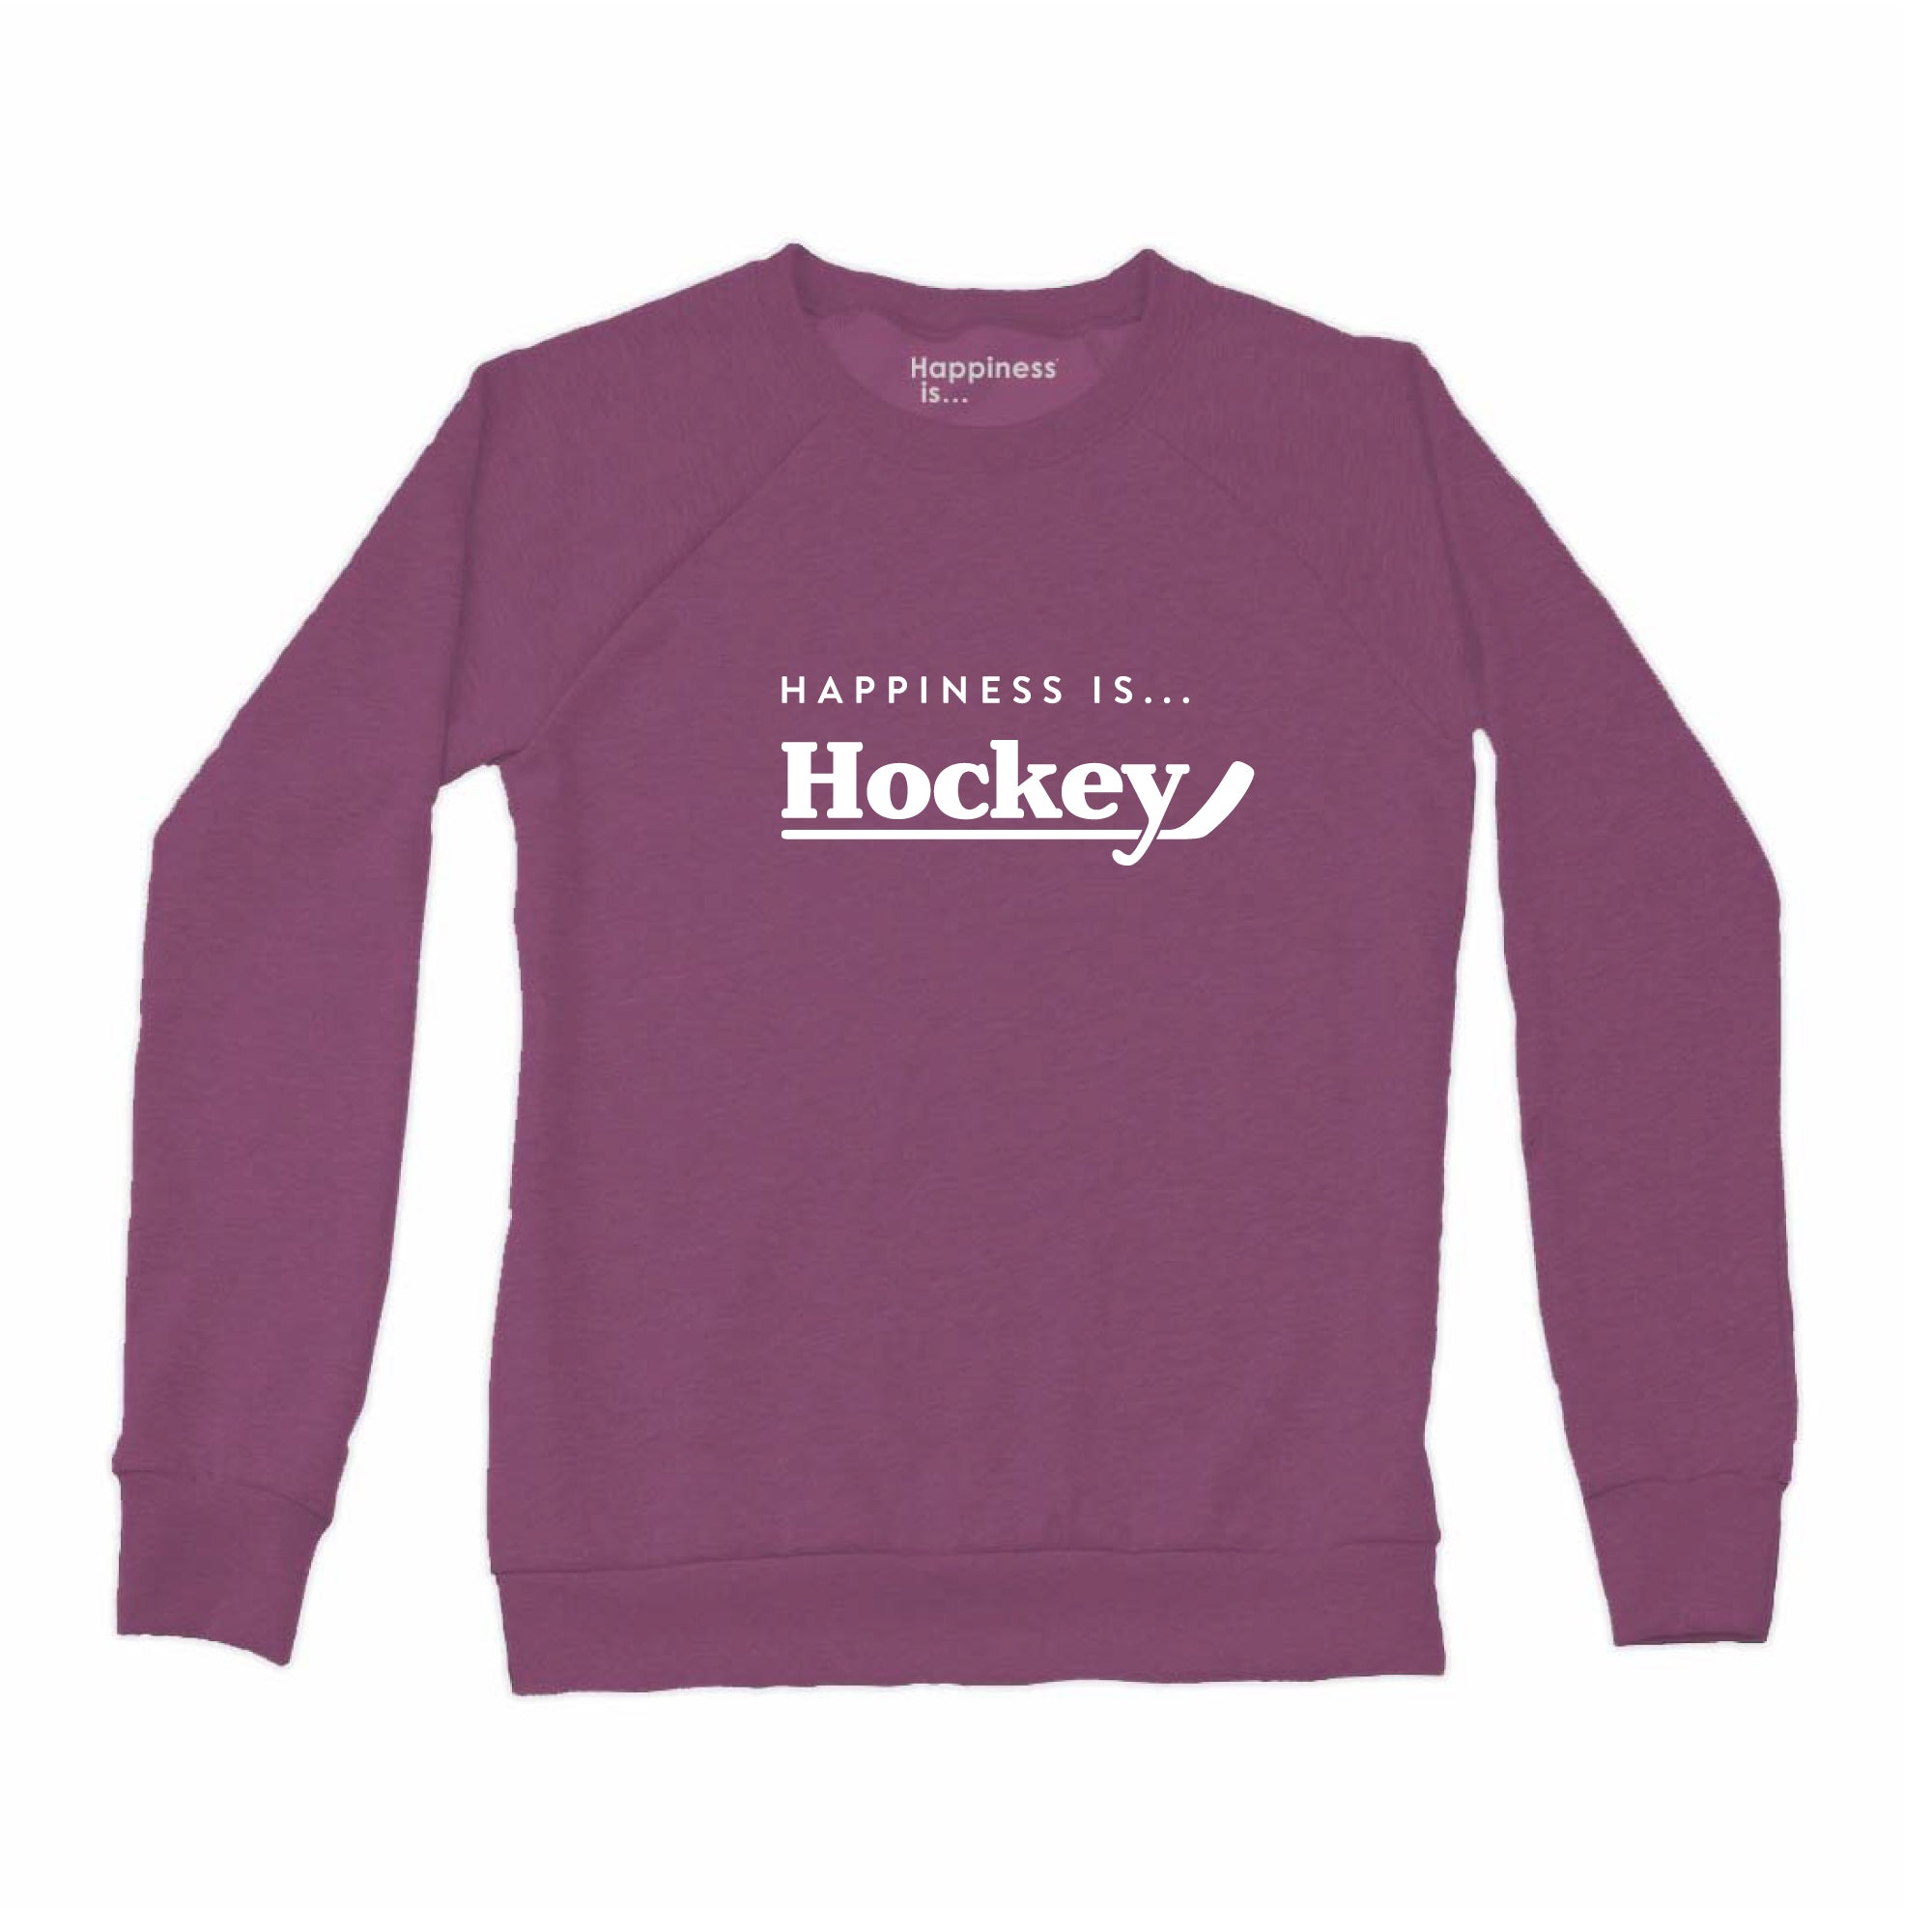 image for Women's Hockey Crew Sweatshirt, Plum